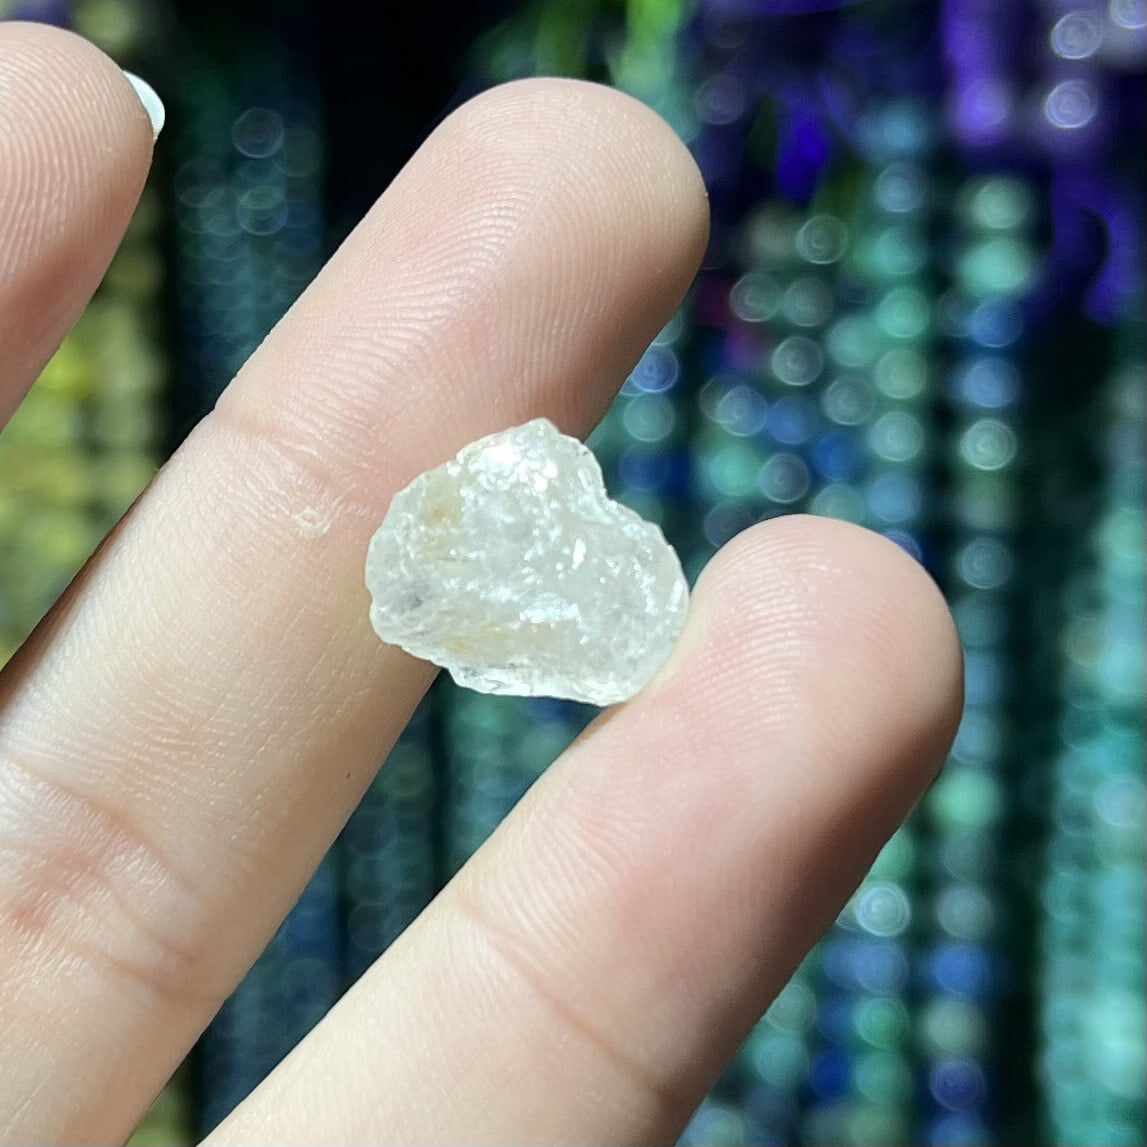 Fenacit nigerian cristal natural unicat f2